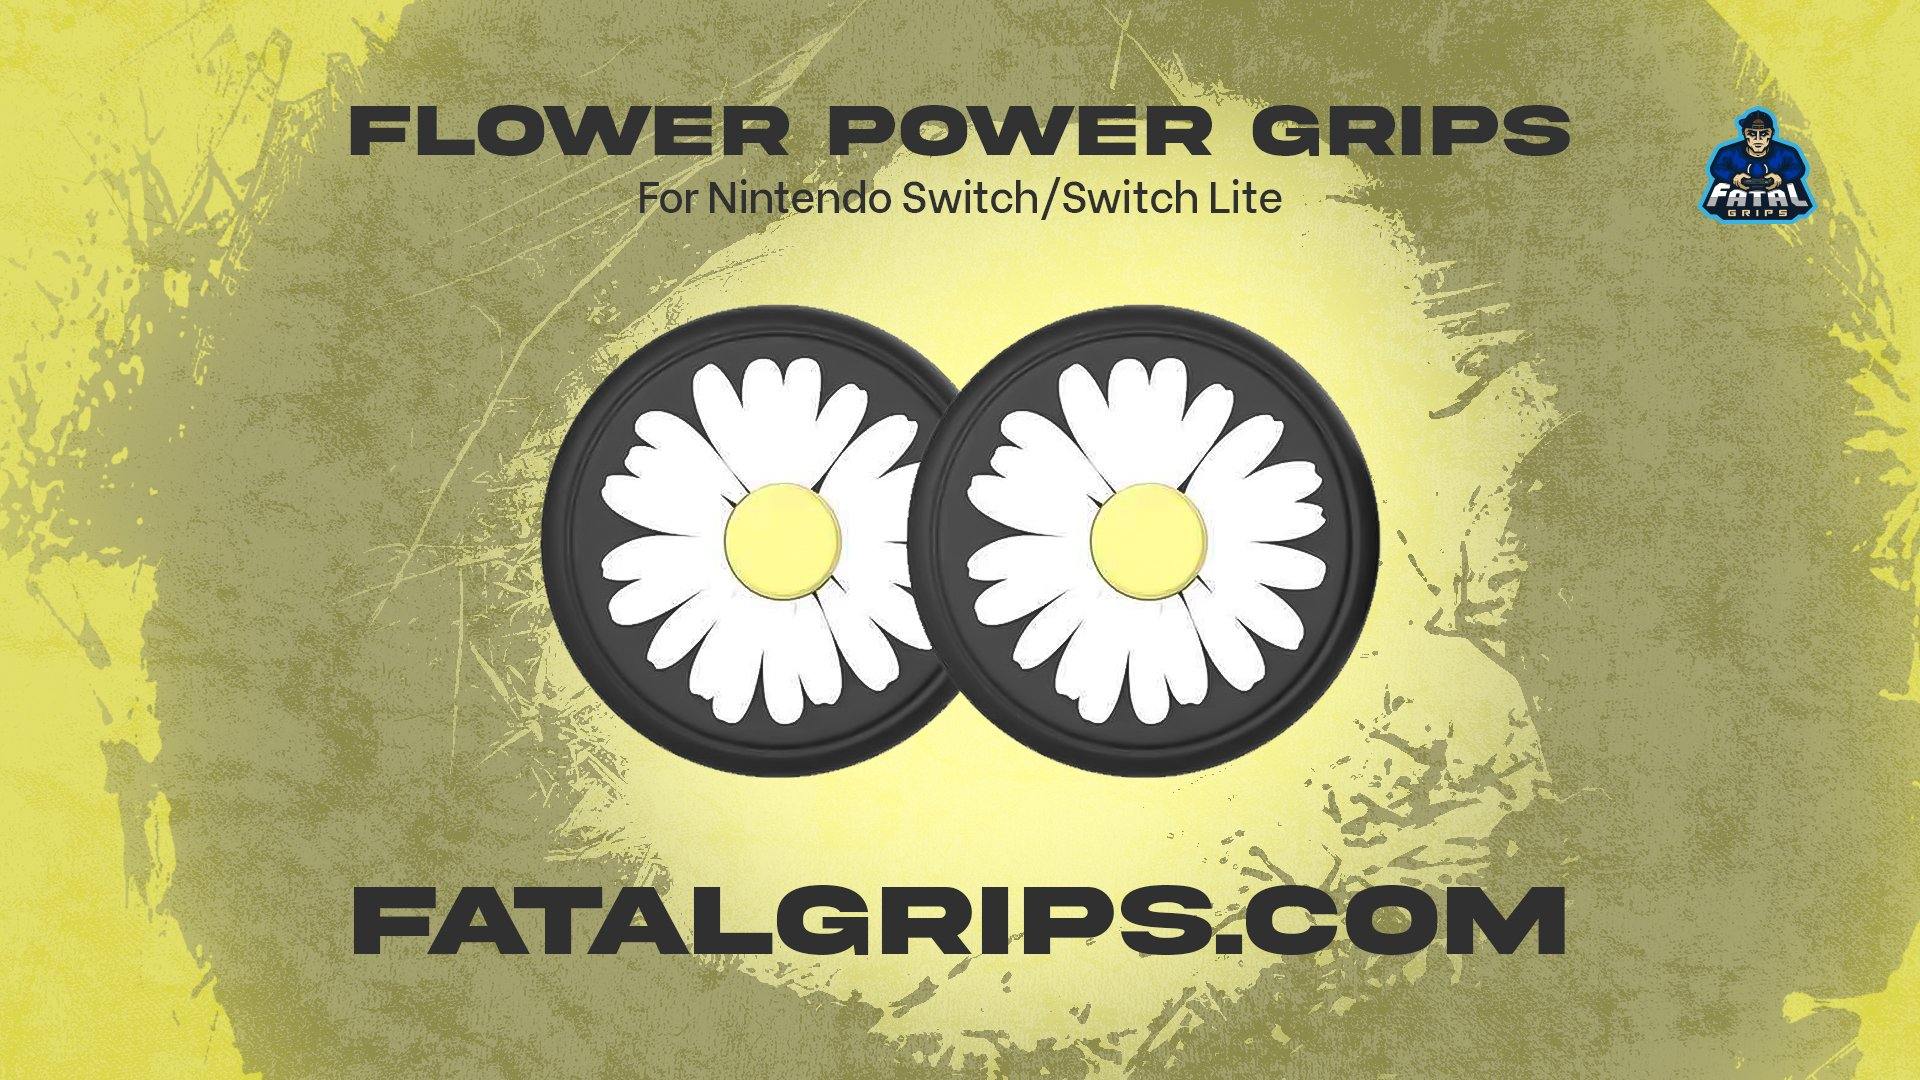 Flower Power Grips - Fatal Grips